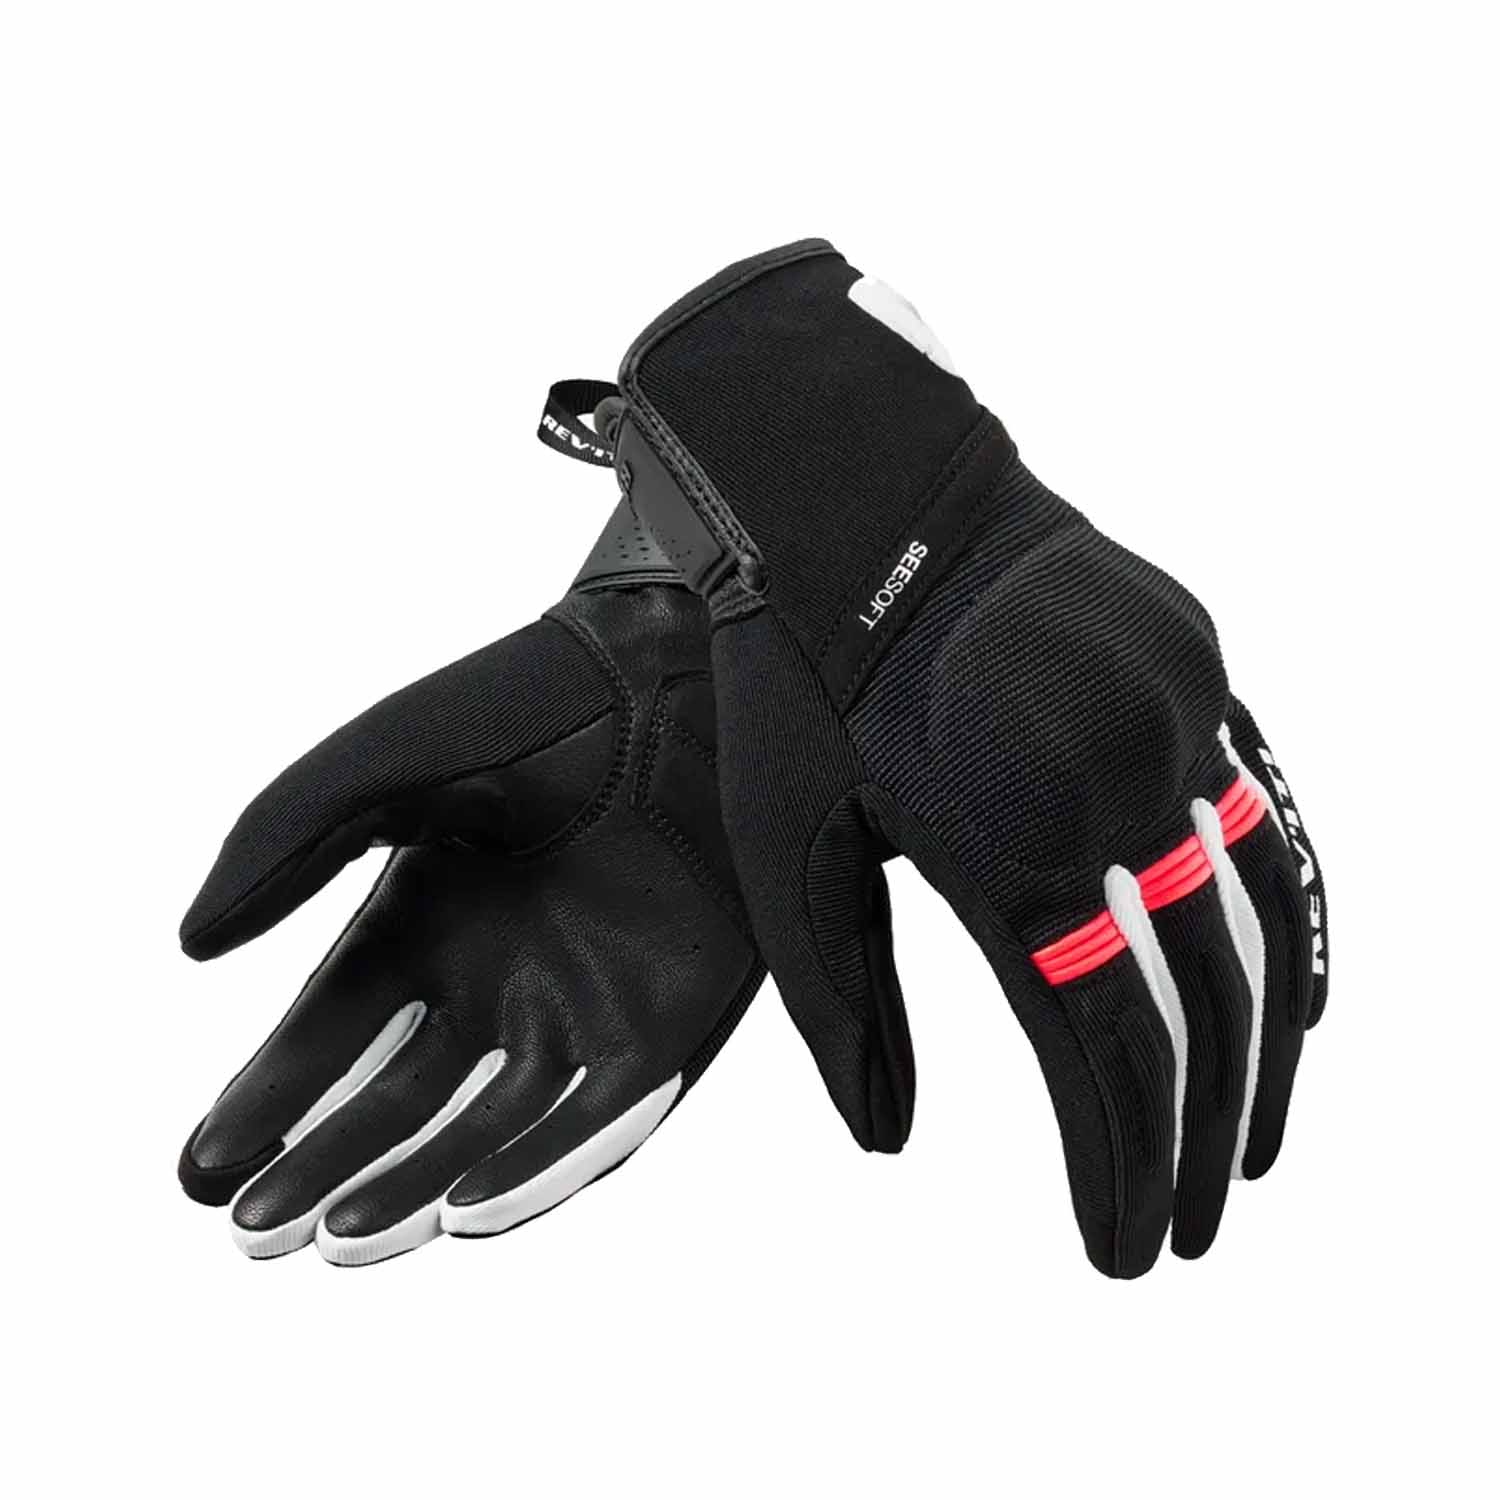 Image of REV'IT! Mosca 2 Ladies Gloves Black Pink Talla XL